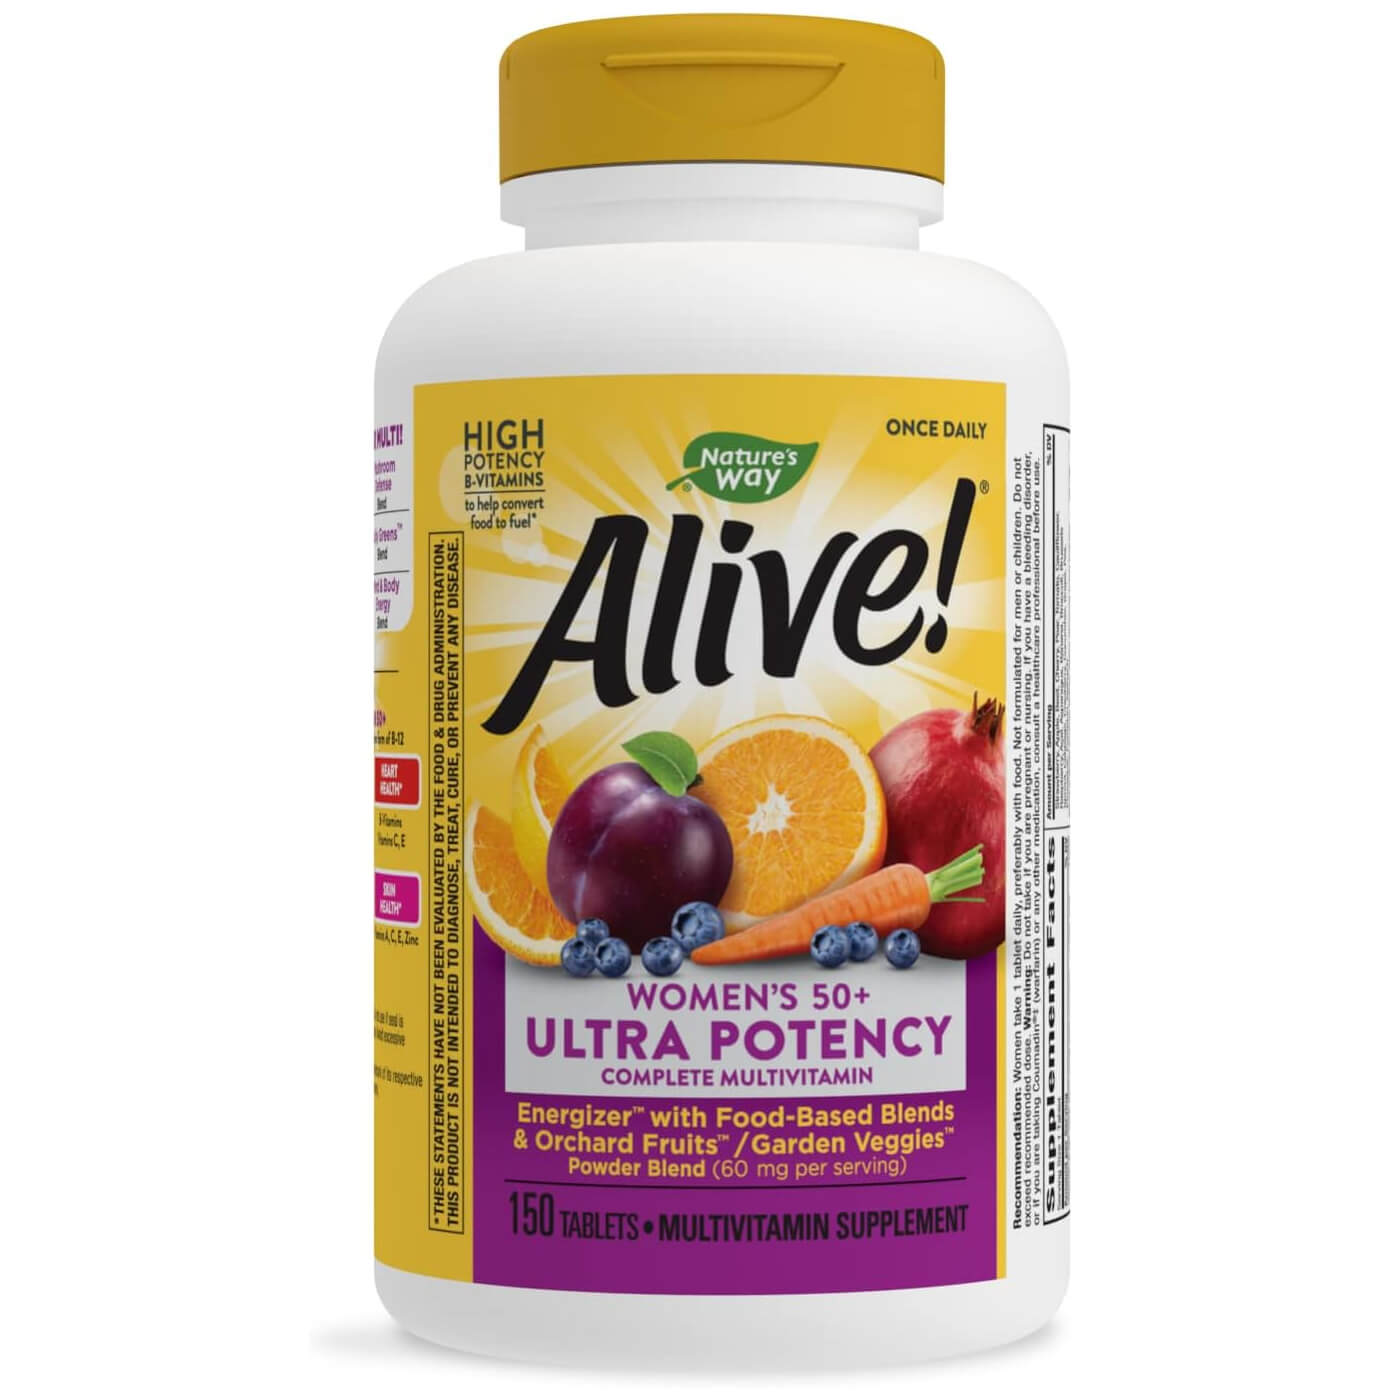 Мультивитамины для женщин 50+ Nature's Way Alive! Ultra Potency Complete Gluten-Free, 150 таблеток полноценный мультивитамин ultra potency 60 таблеток men s 50 nature s way